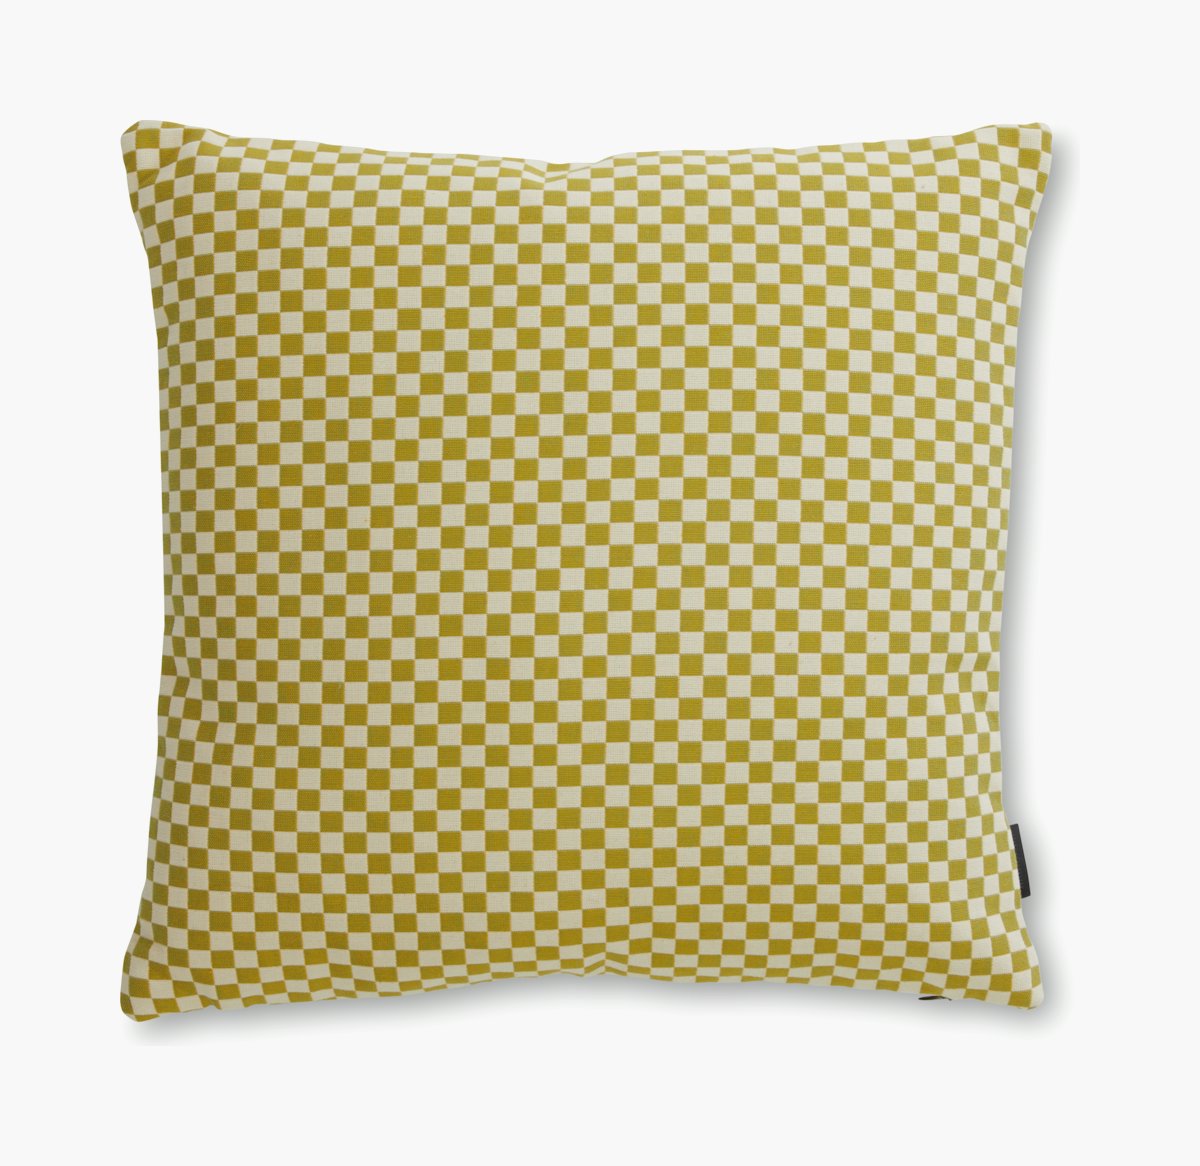 Checker Throw Pillow by Alexander Girard